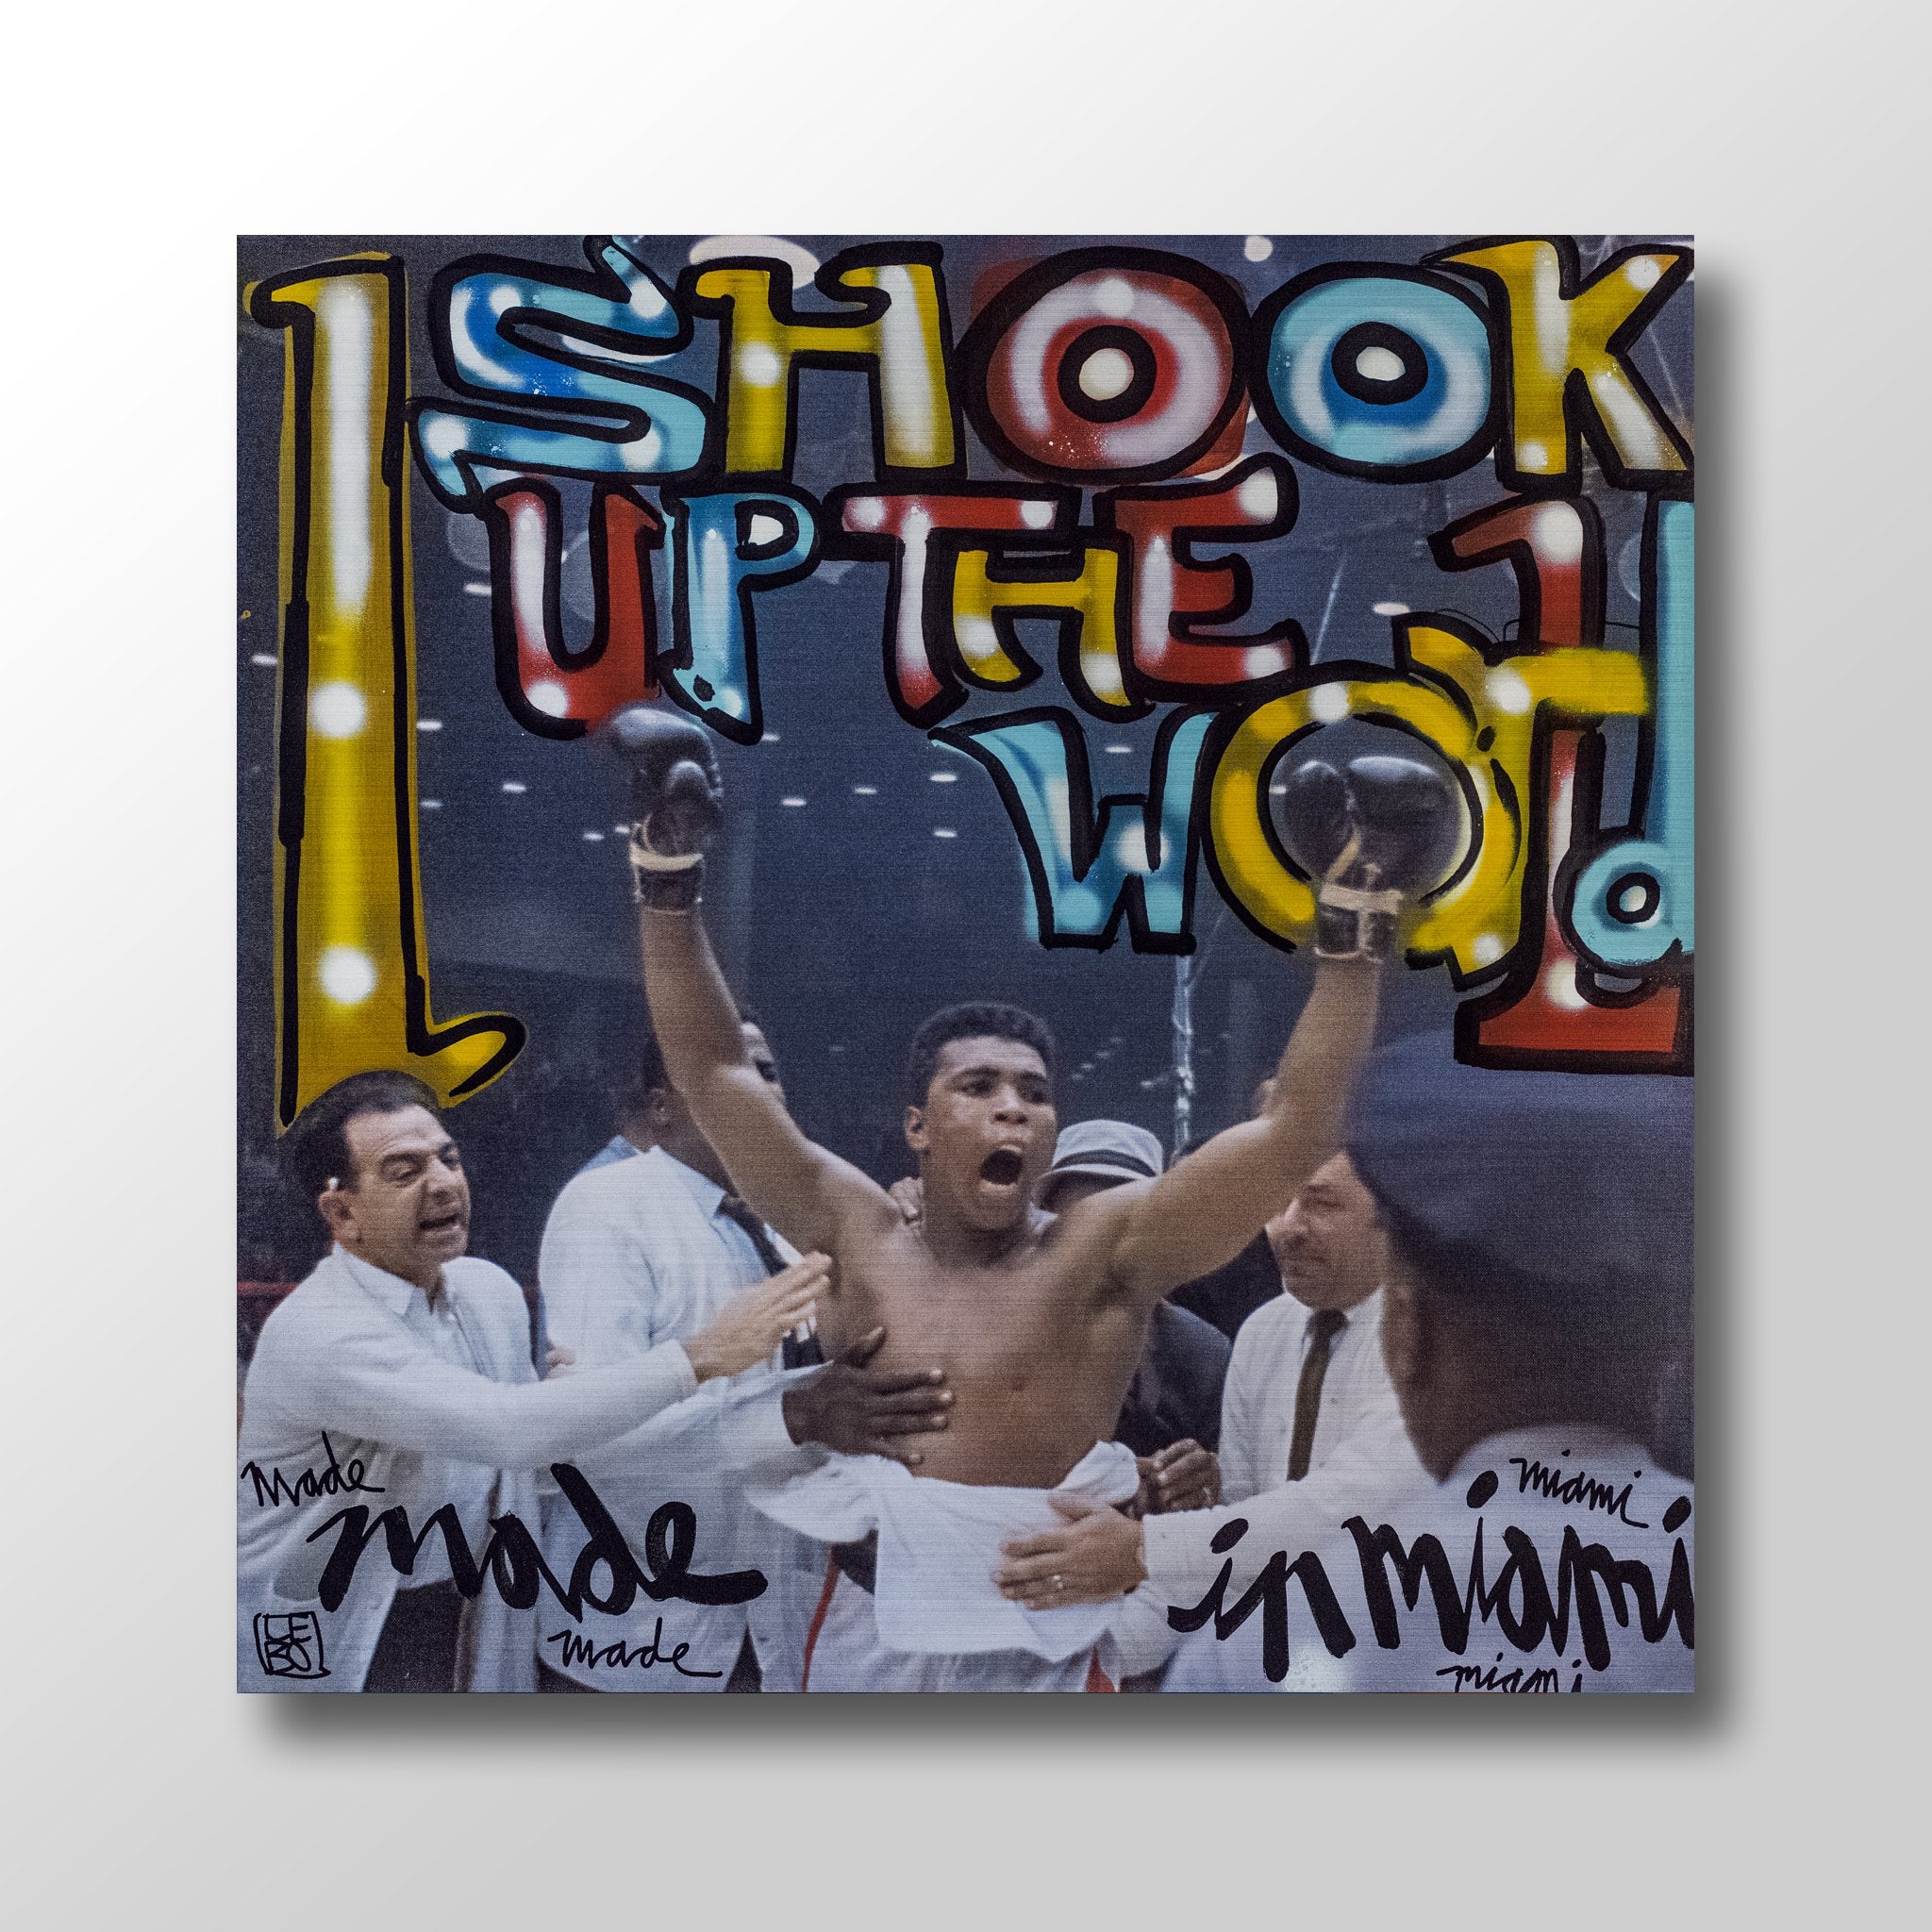 Shook The World - Limited Edition - Art Bond - shop.leboart.com